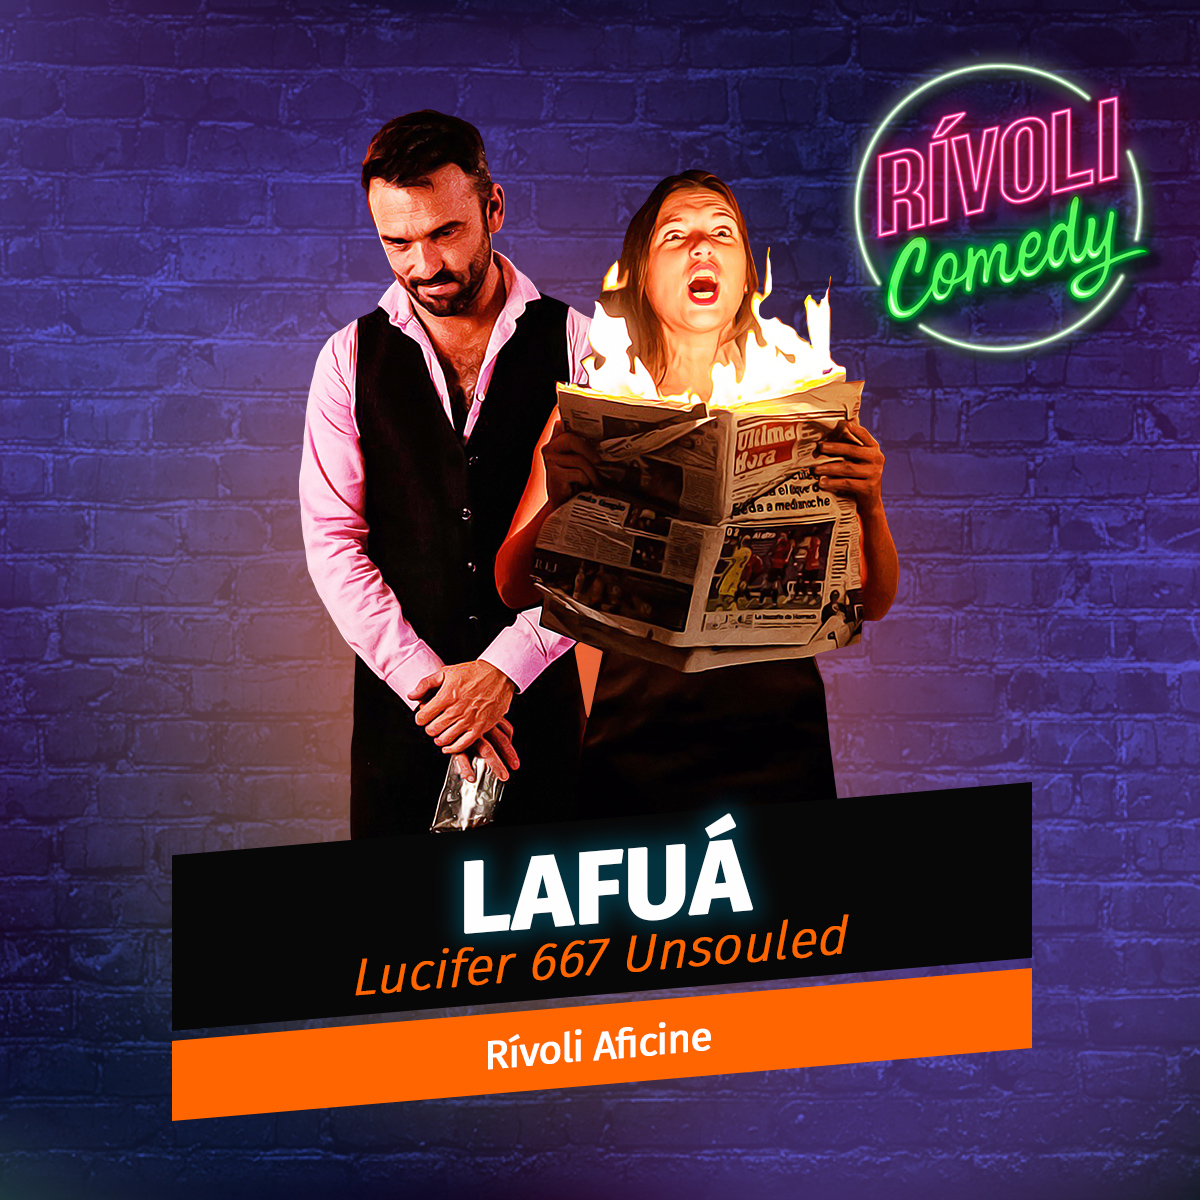 Lafuá | Lucifer 667 Unsouled · 14 de enero · Palma de Mallorca (Rívoli Comedy)